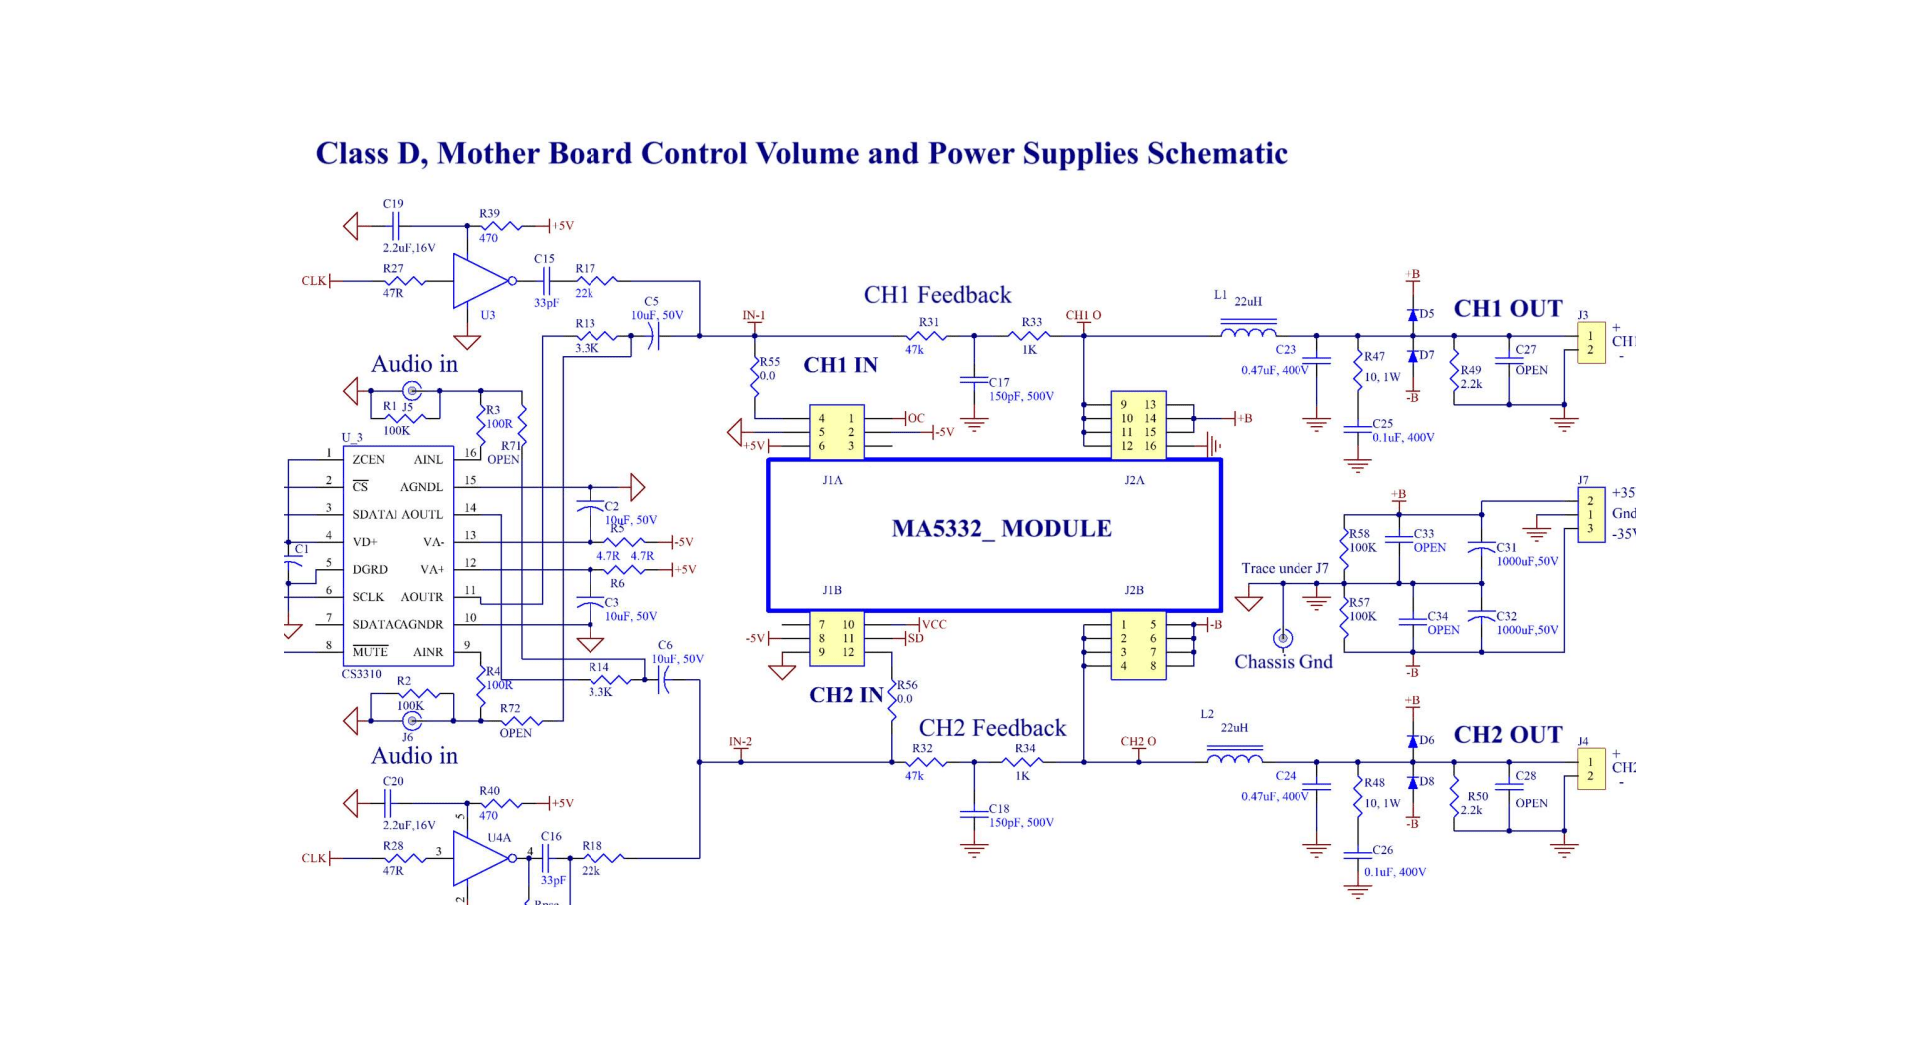 RENESAS VCA Voltage Controlled Amplifier M51132L (5個セット), カテゴリ別,部品,半導体製品,信号部品,アンプIC